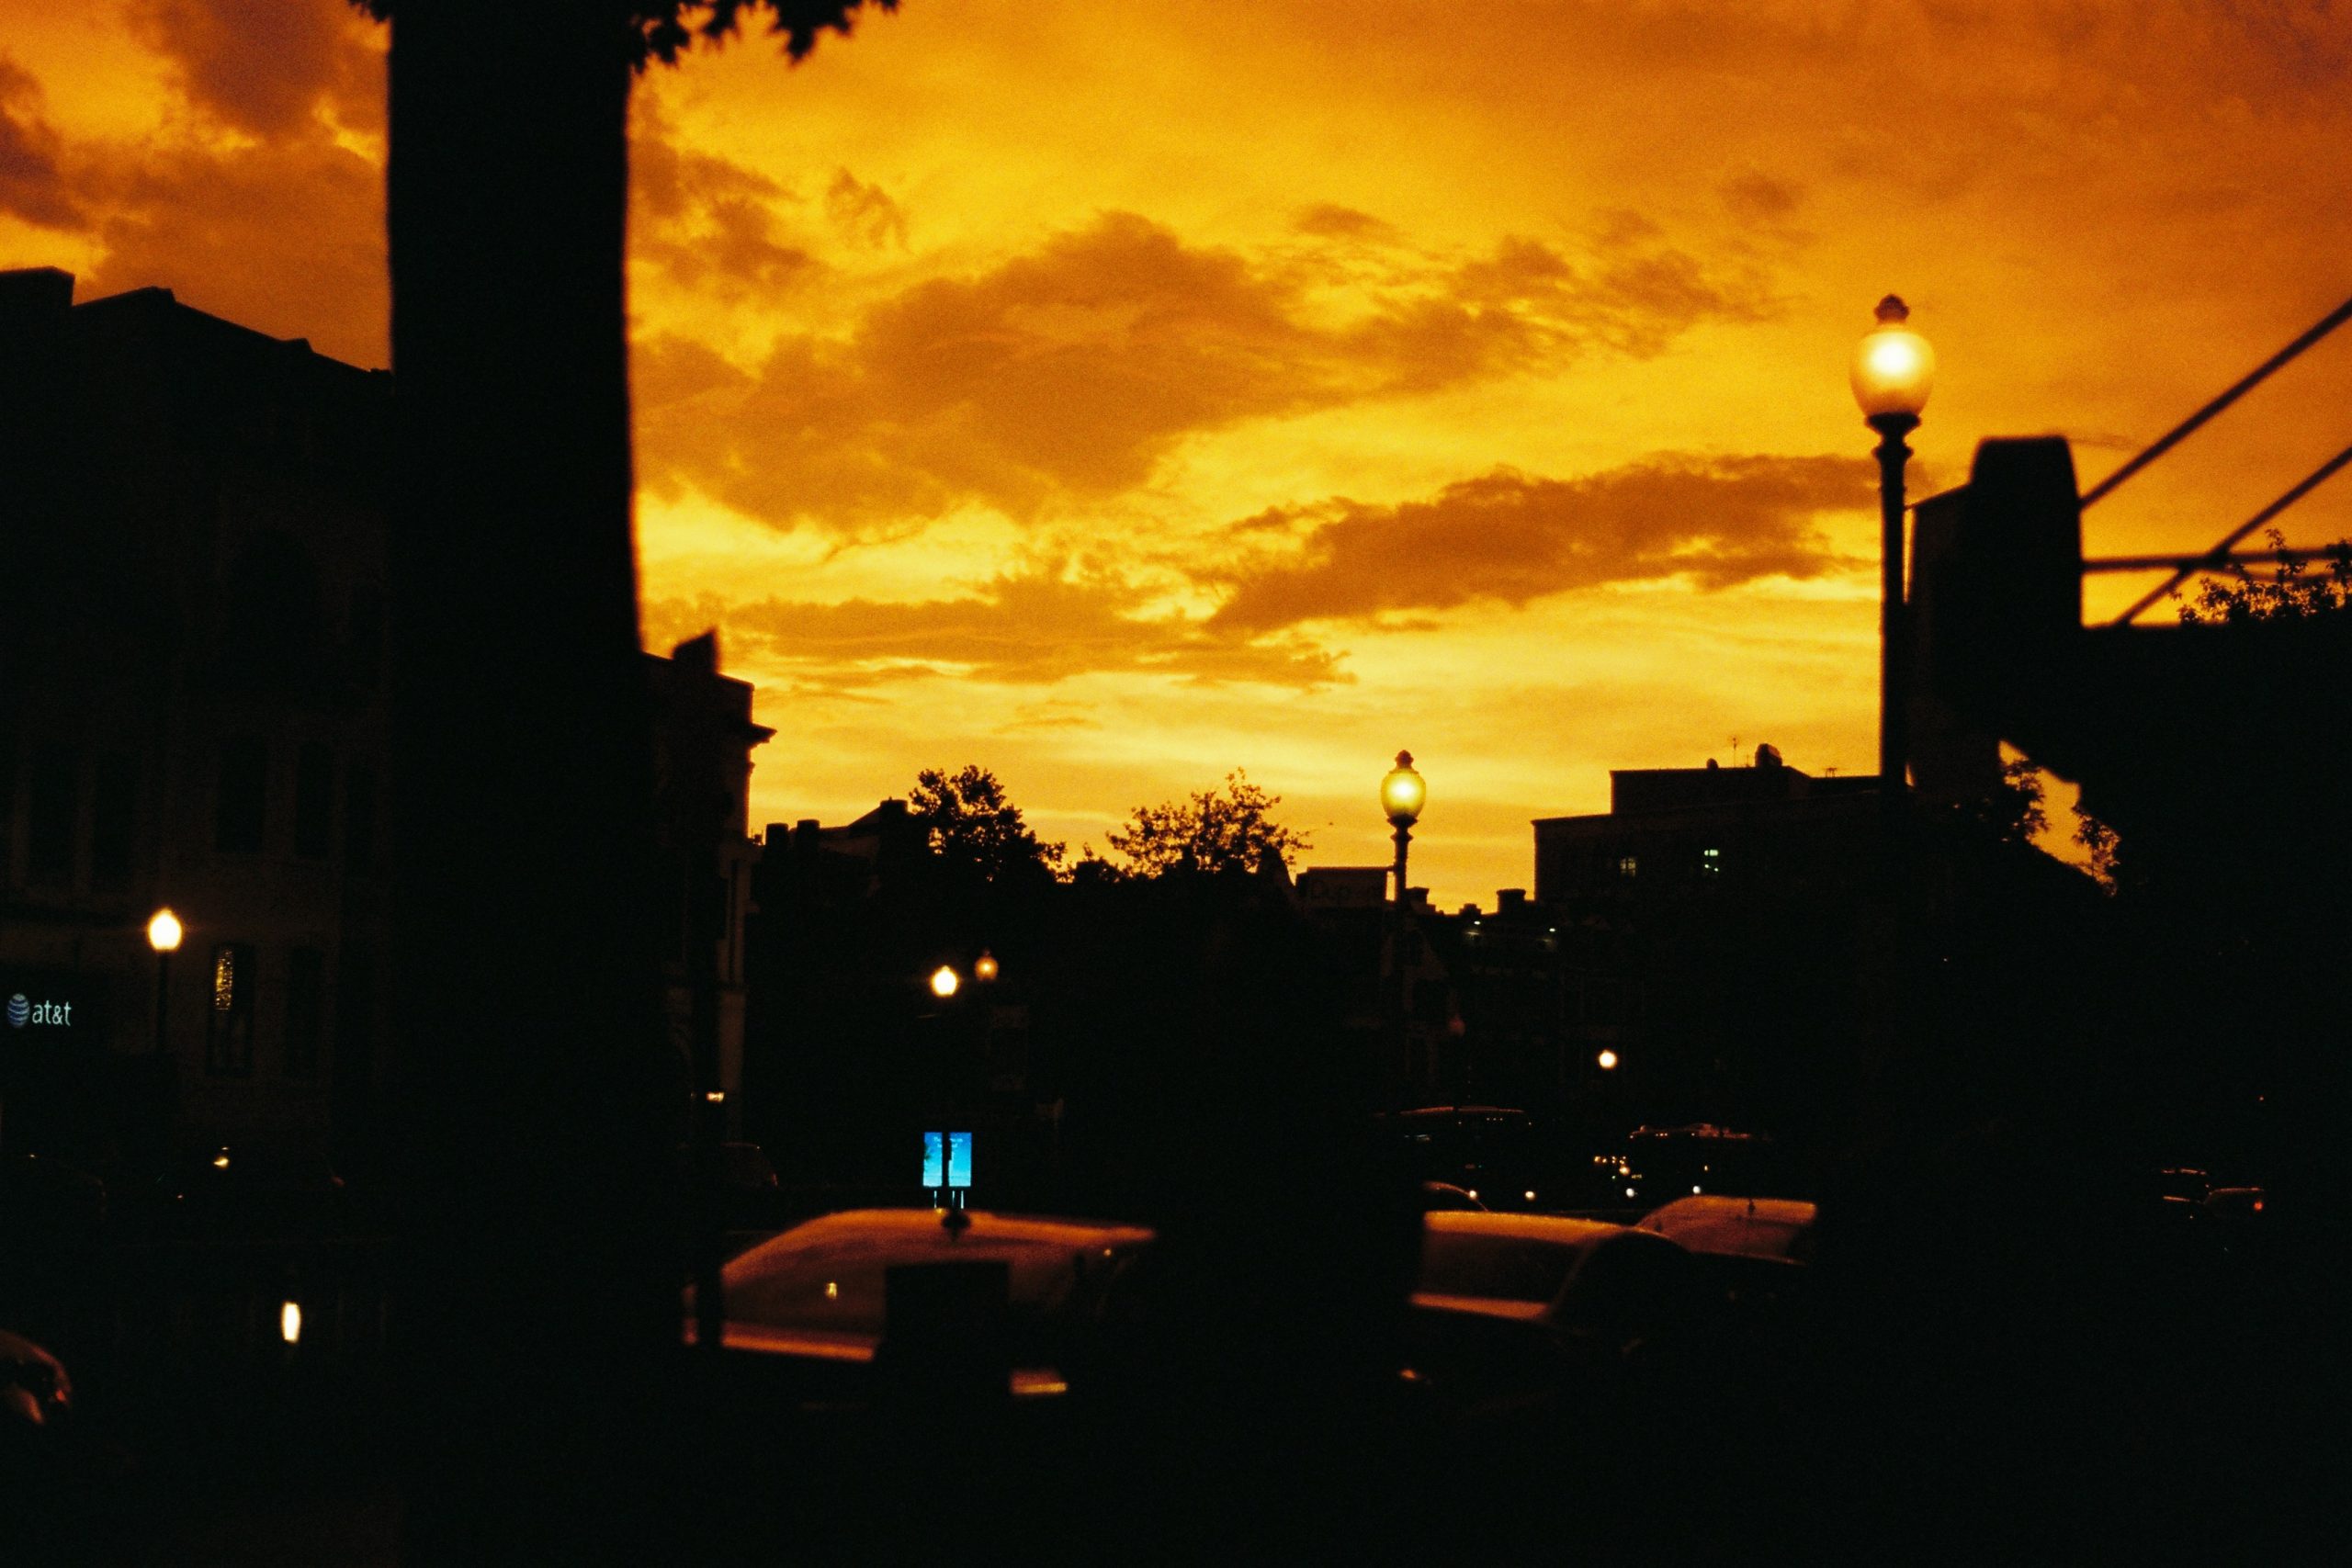 washington dc, ambiance, mood, yellow, sky, city, photographer